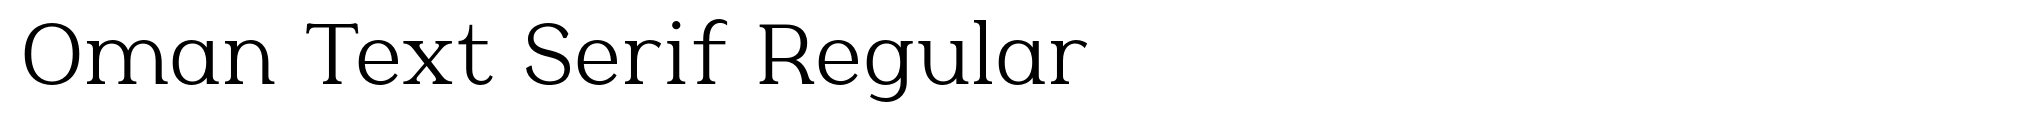 Oman Text Serif Regular image